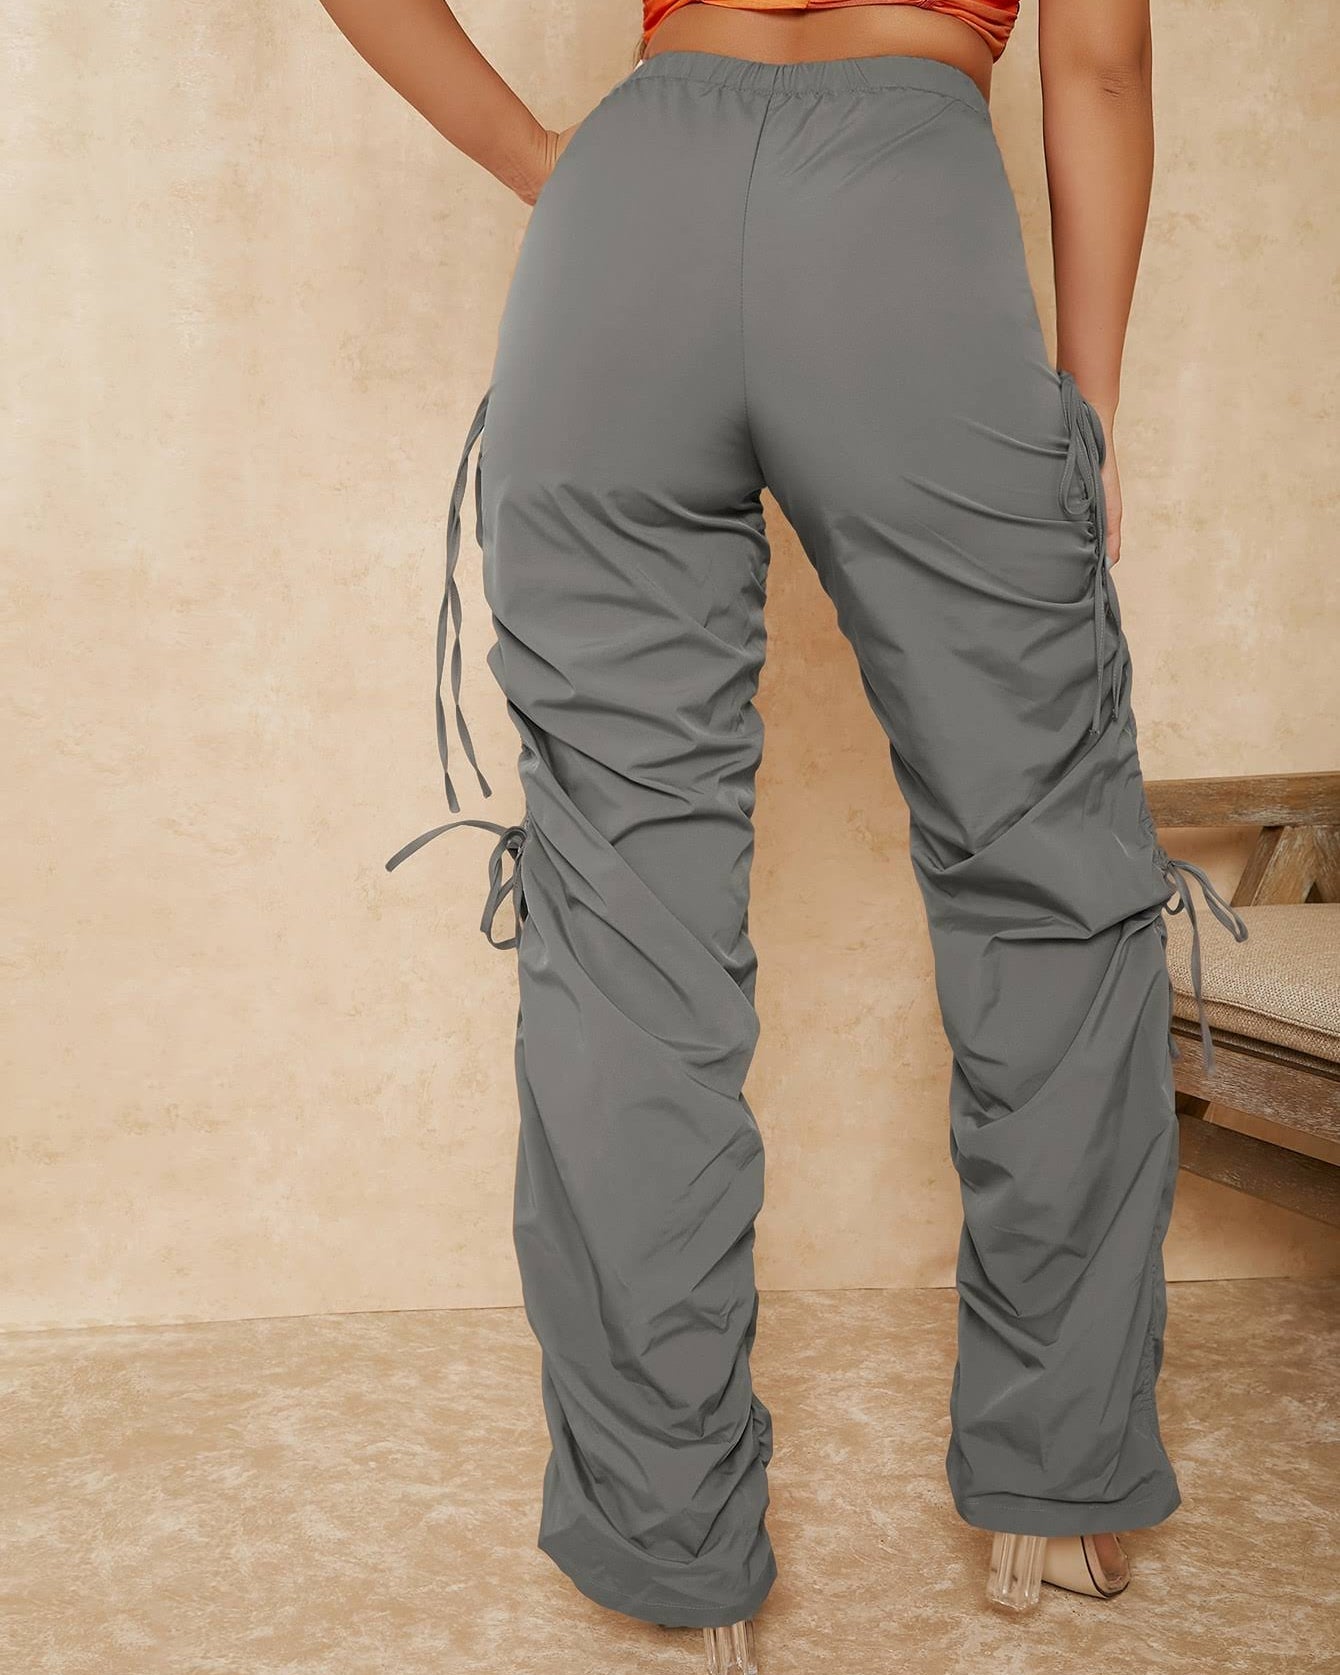 Cut Out Drawstring Side Pants Cut Out Drawstring Side Pants Pants The Shop Room